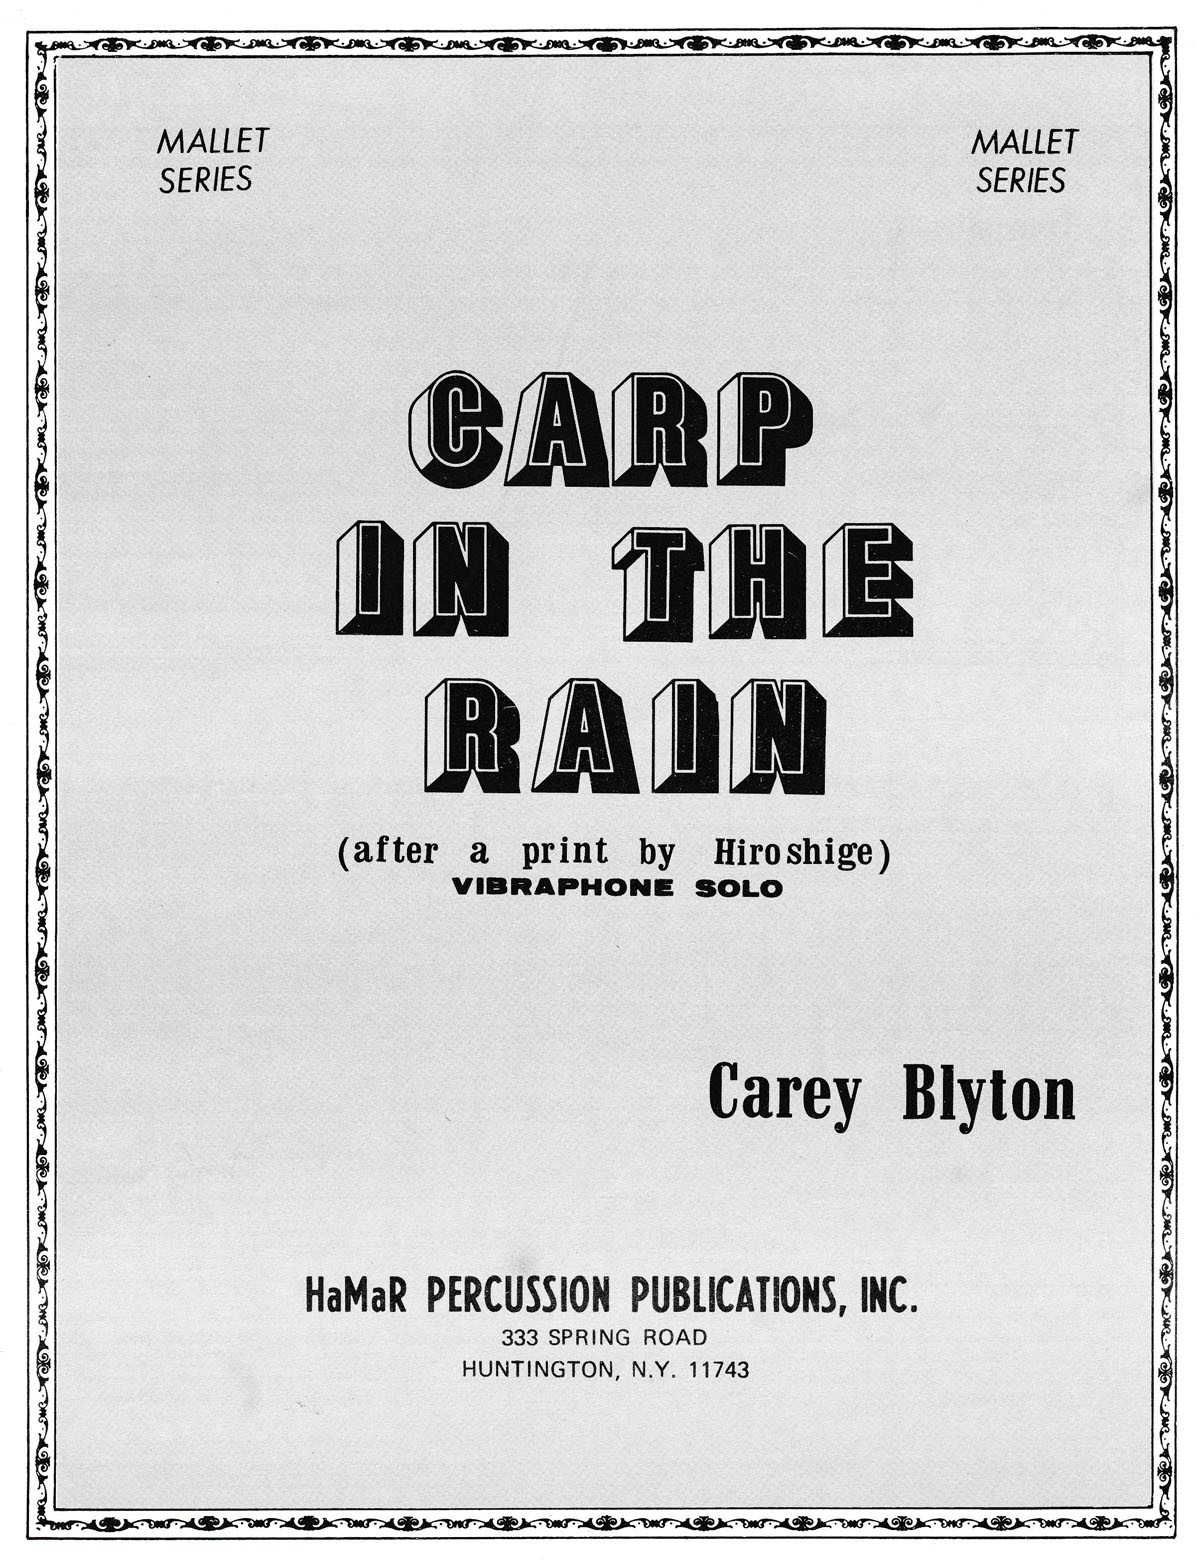 Carp in the Rain by Carey Blyton